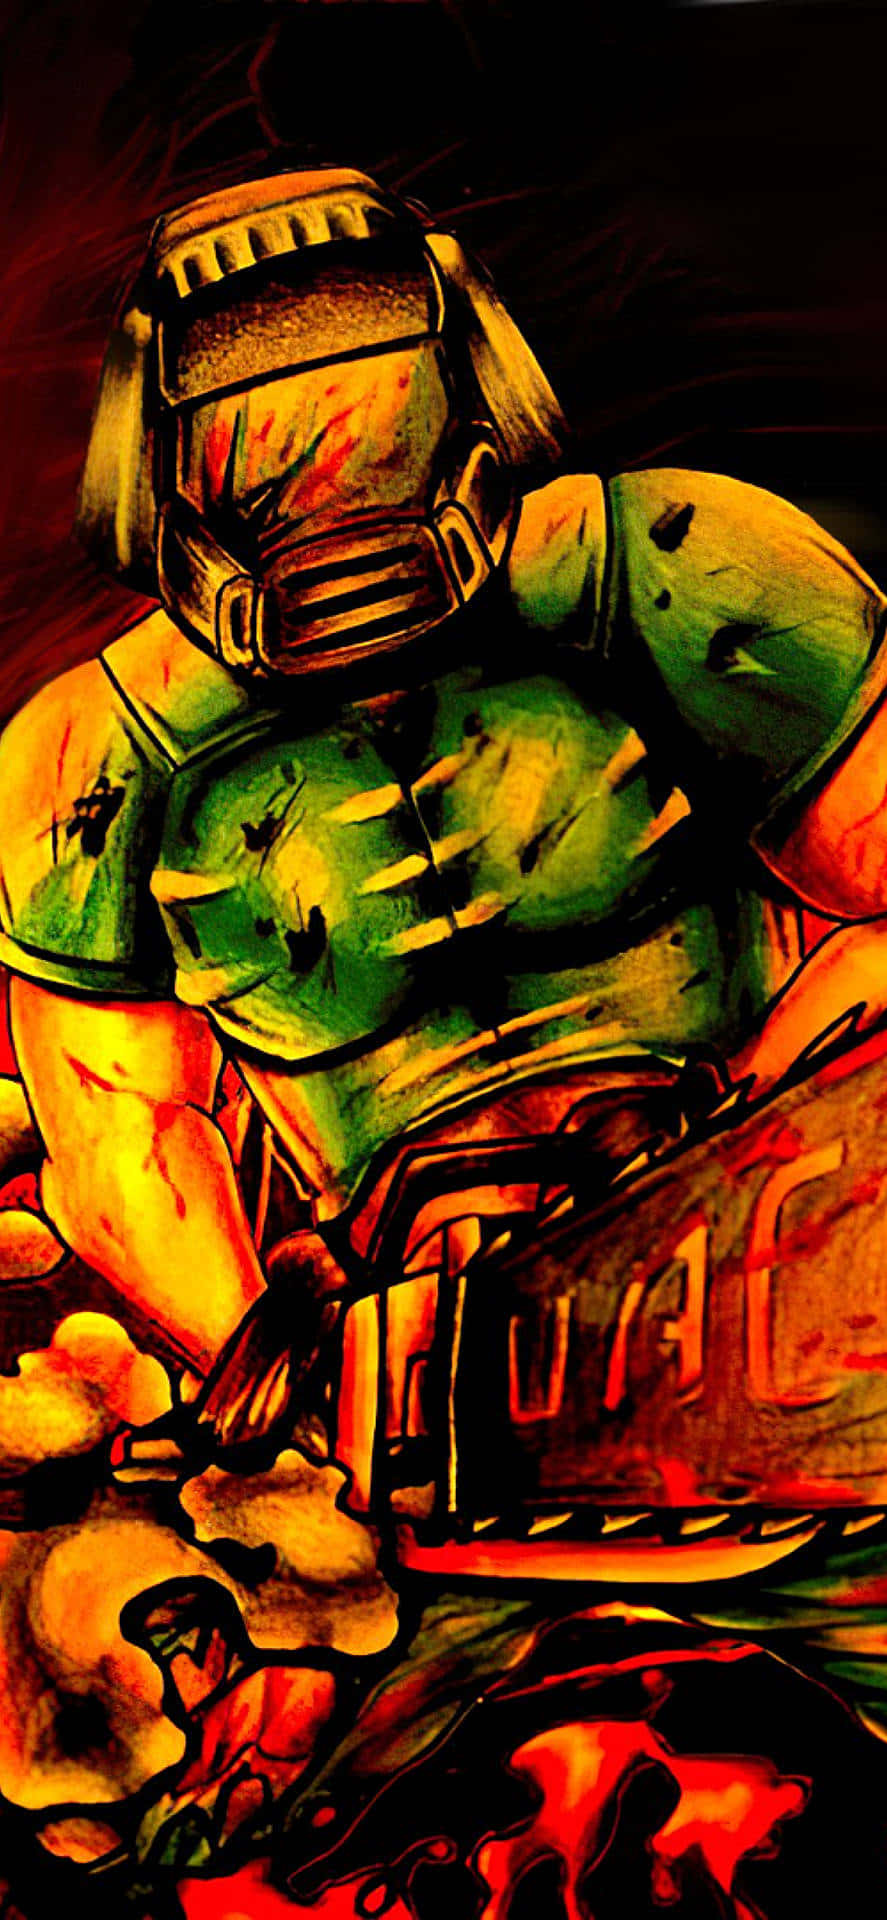 Personajeficticio Doom Guy En Pixel 3xl Doom Eternal Shooter Fondo De Pantalla.